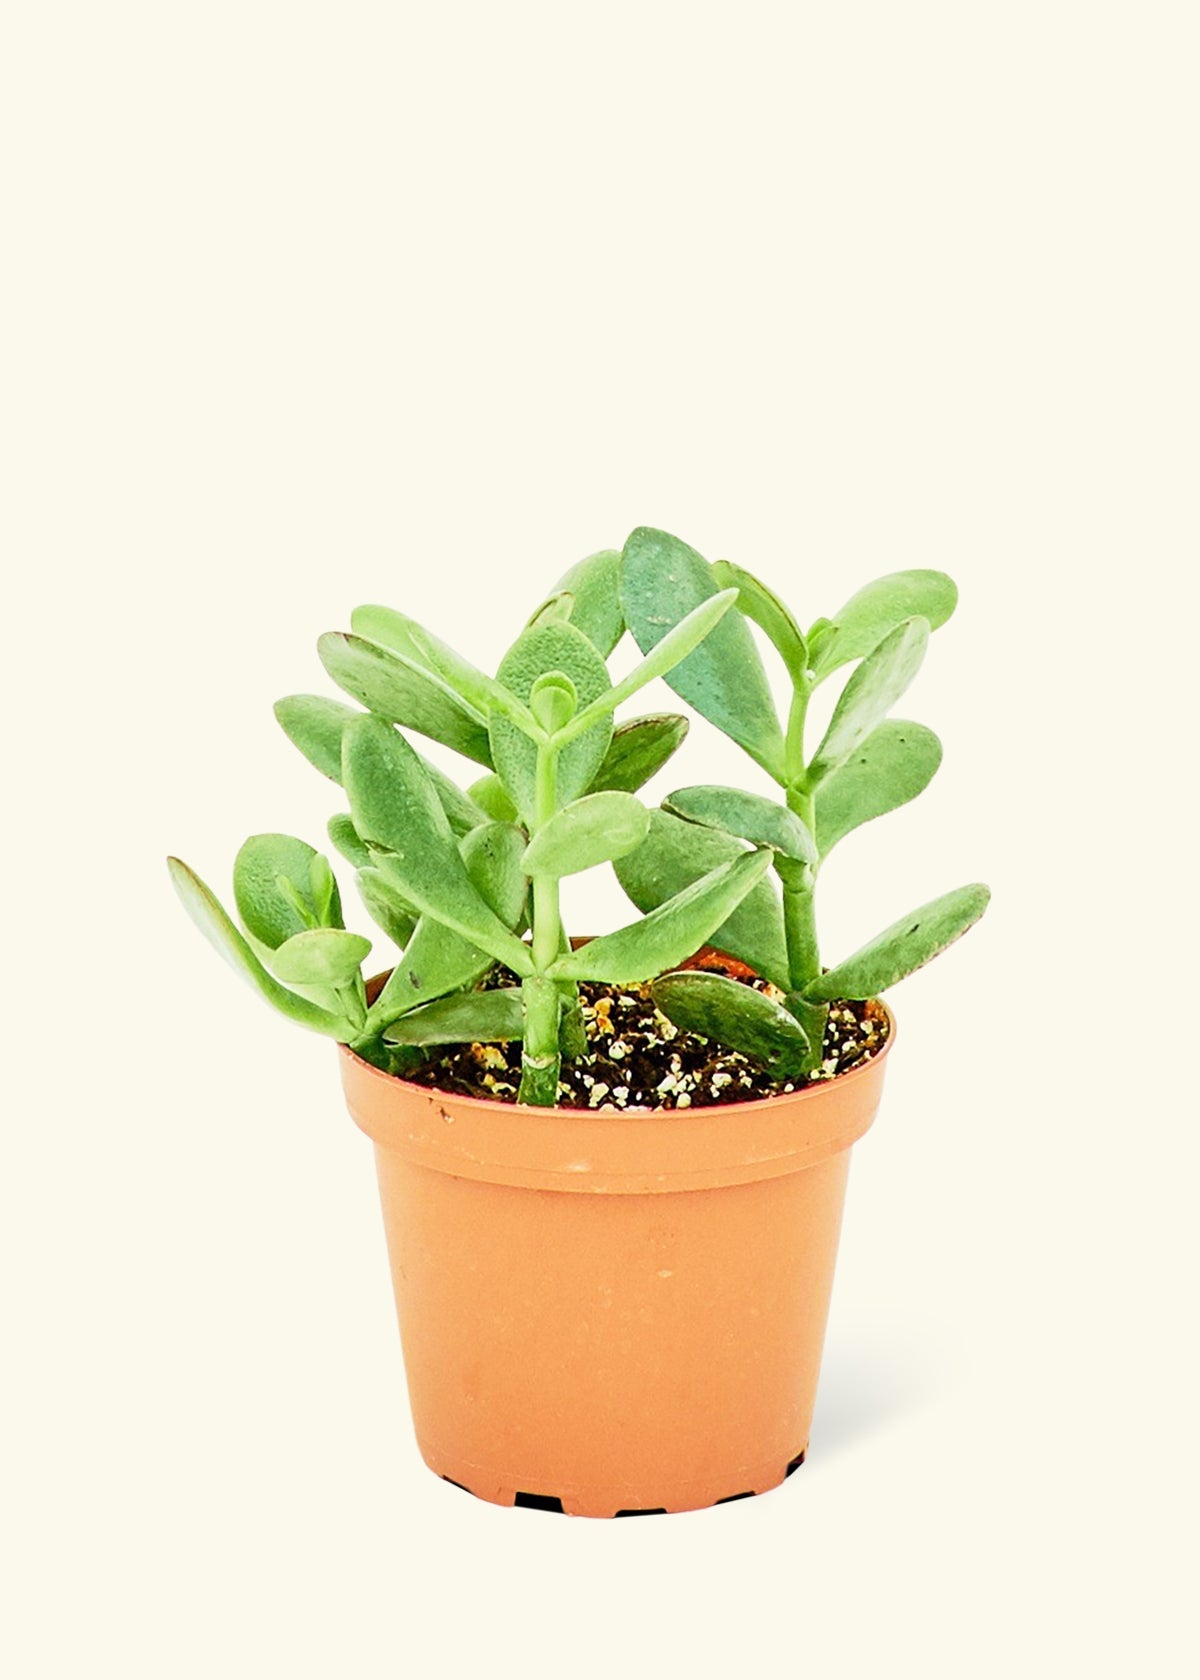 Small Jade Plant (Crassula ovata) in a grow pot.